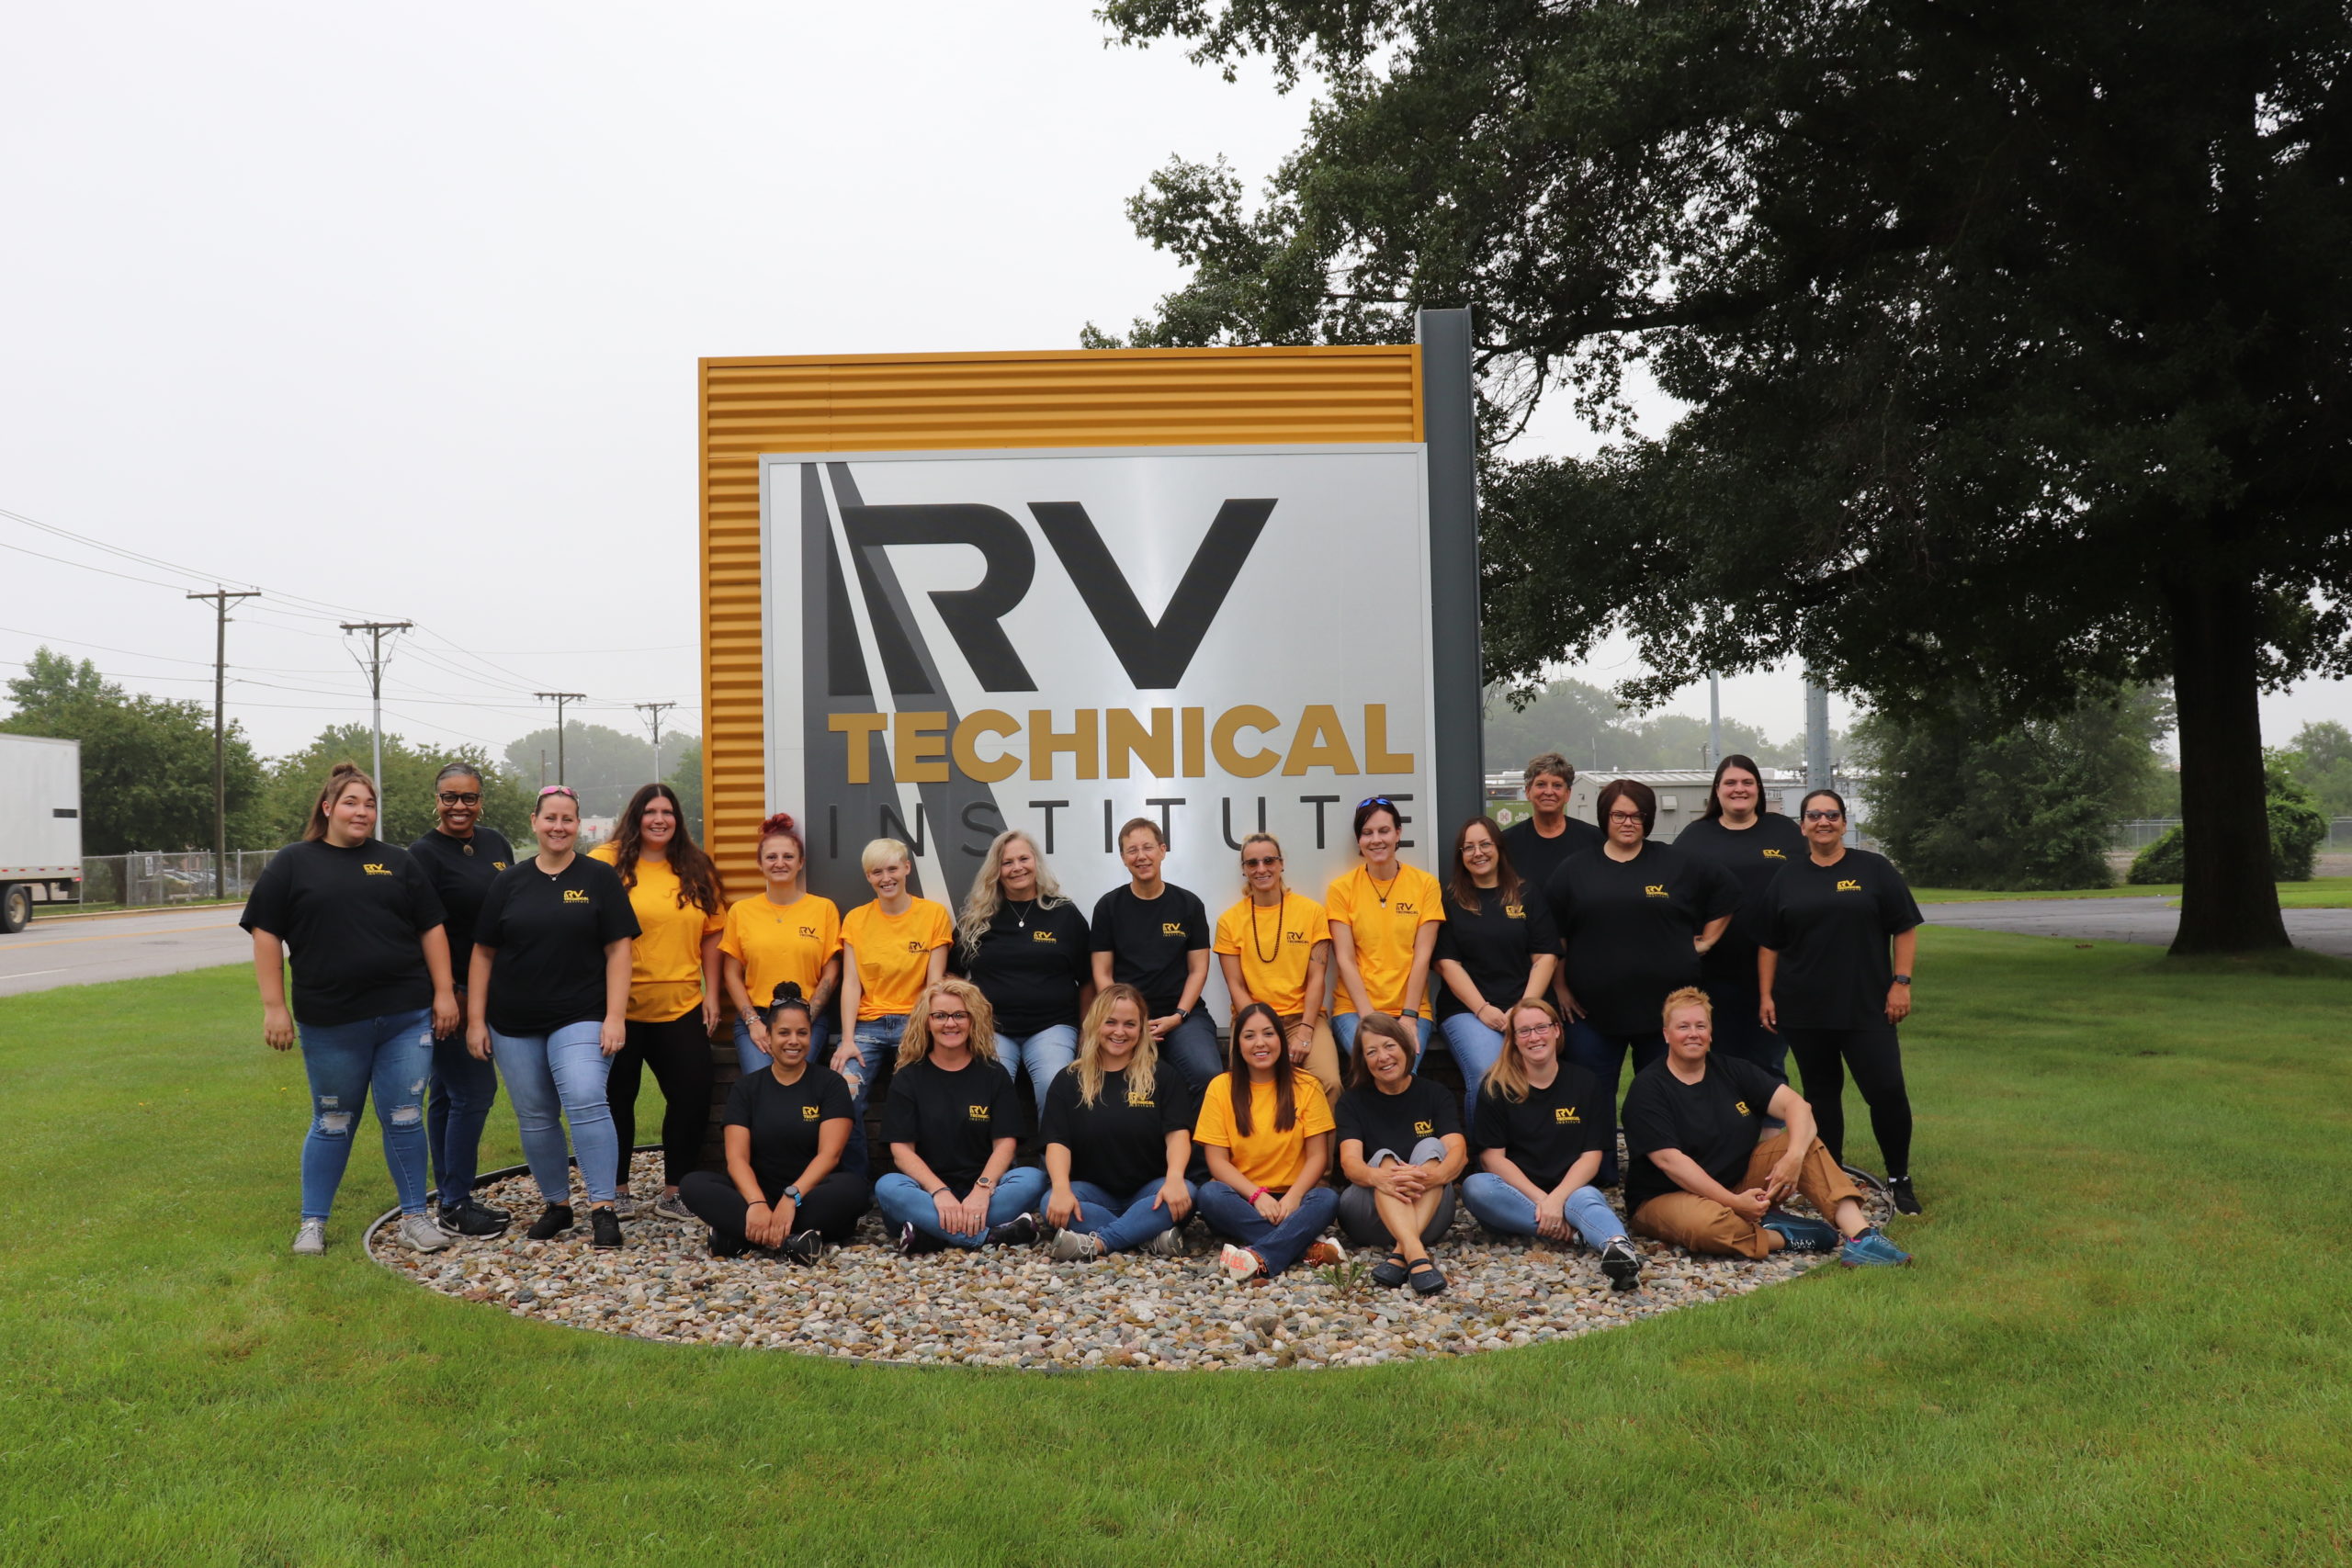 RVWA, FRVTA Partner on New All-Women’s RV Tech Class